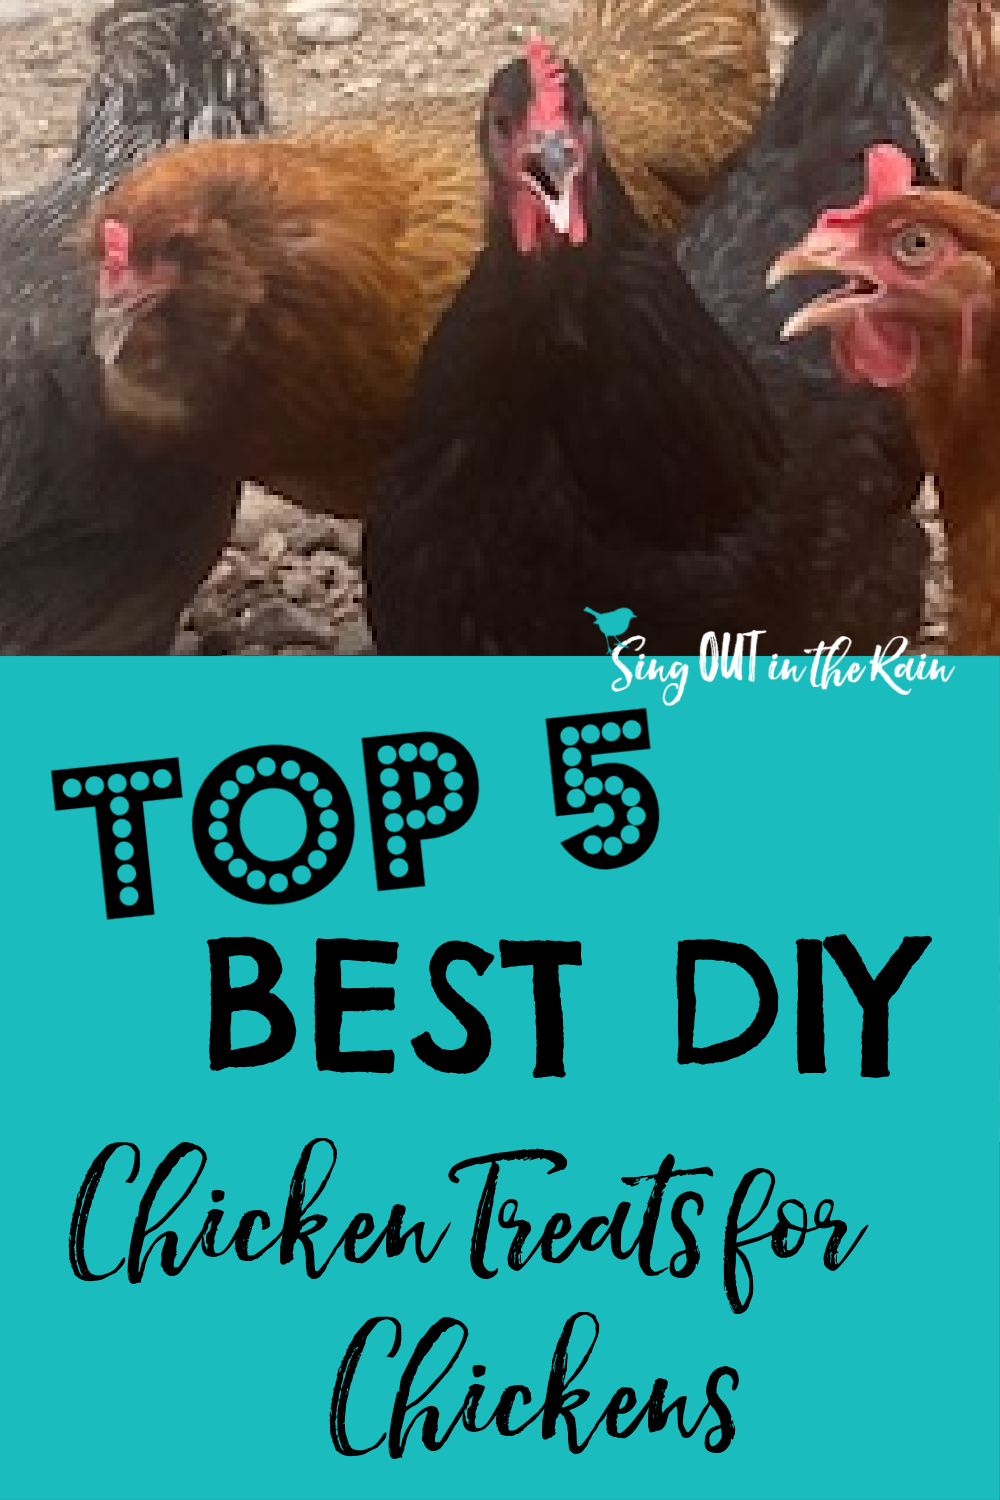 TOP 5 BEST DIY Chicken Treats for Chickens ROUNDUP